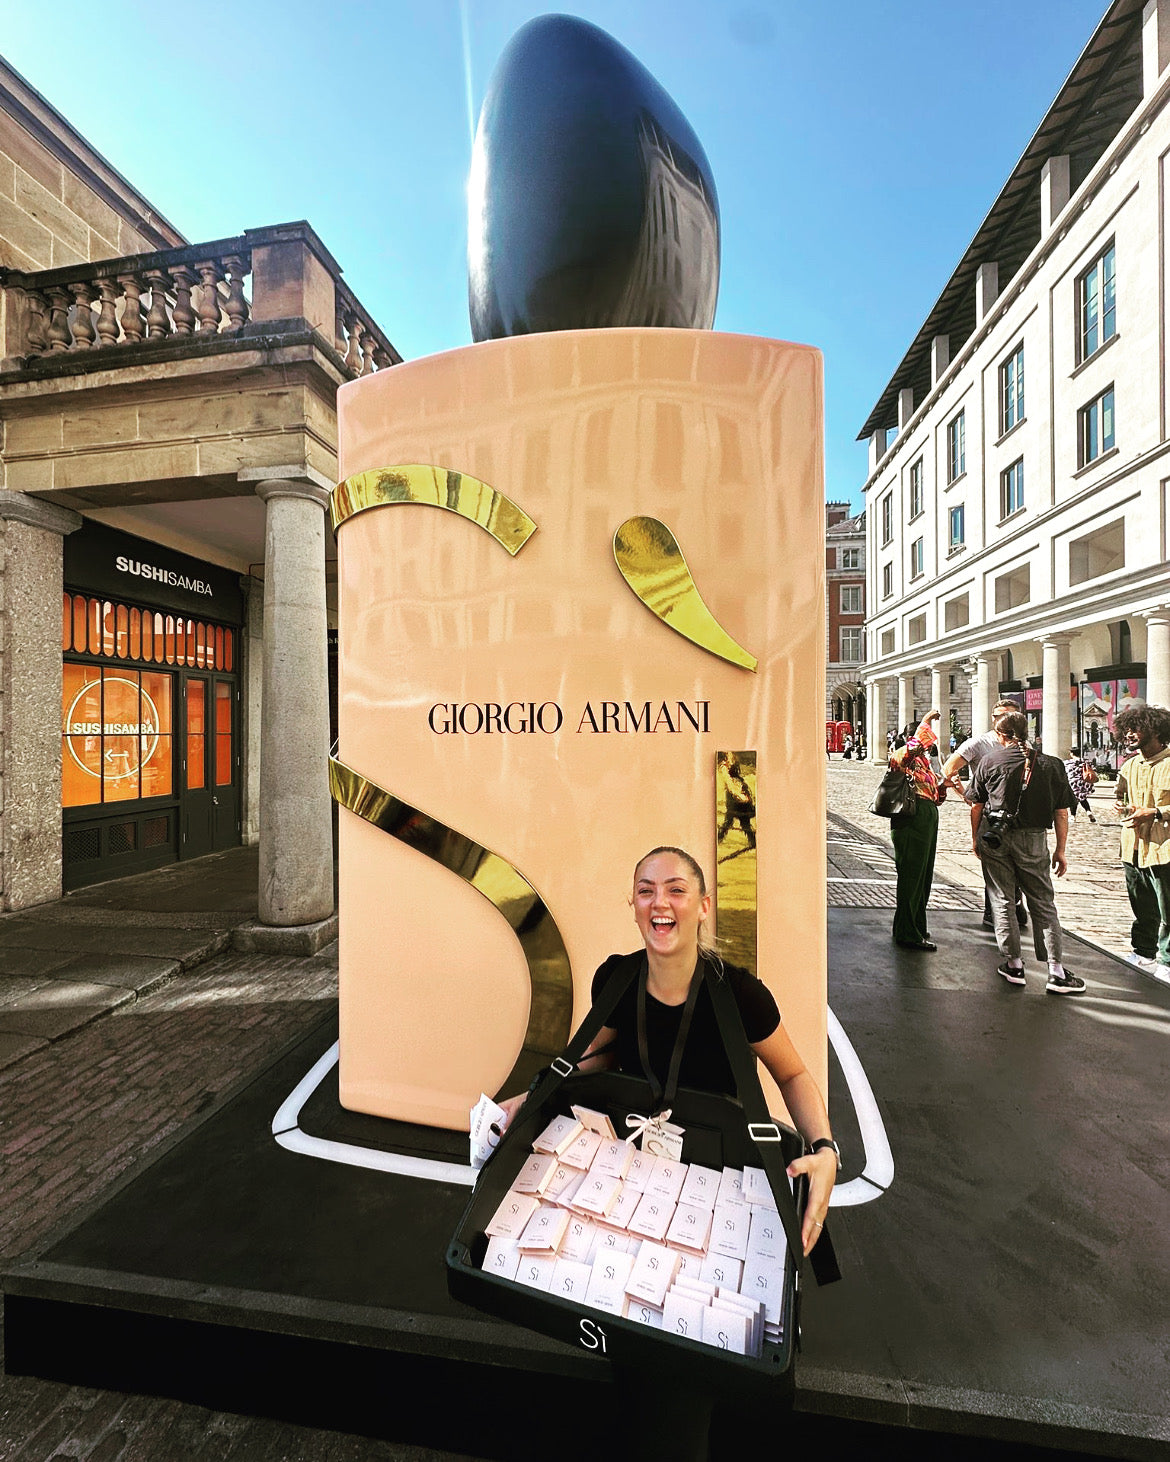 Giorgio Armani branded usherette tray at a brand activation